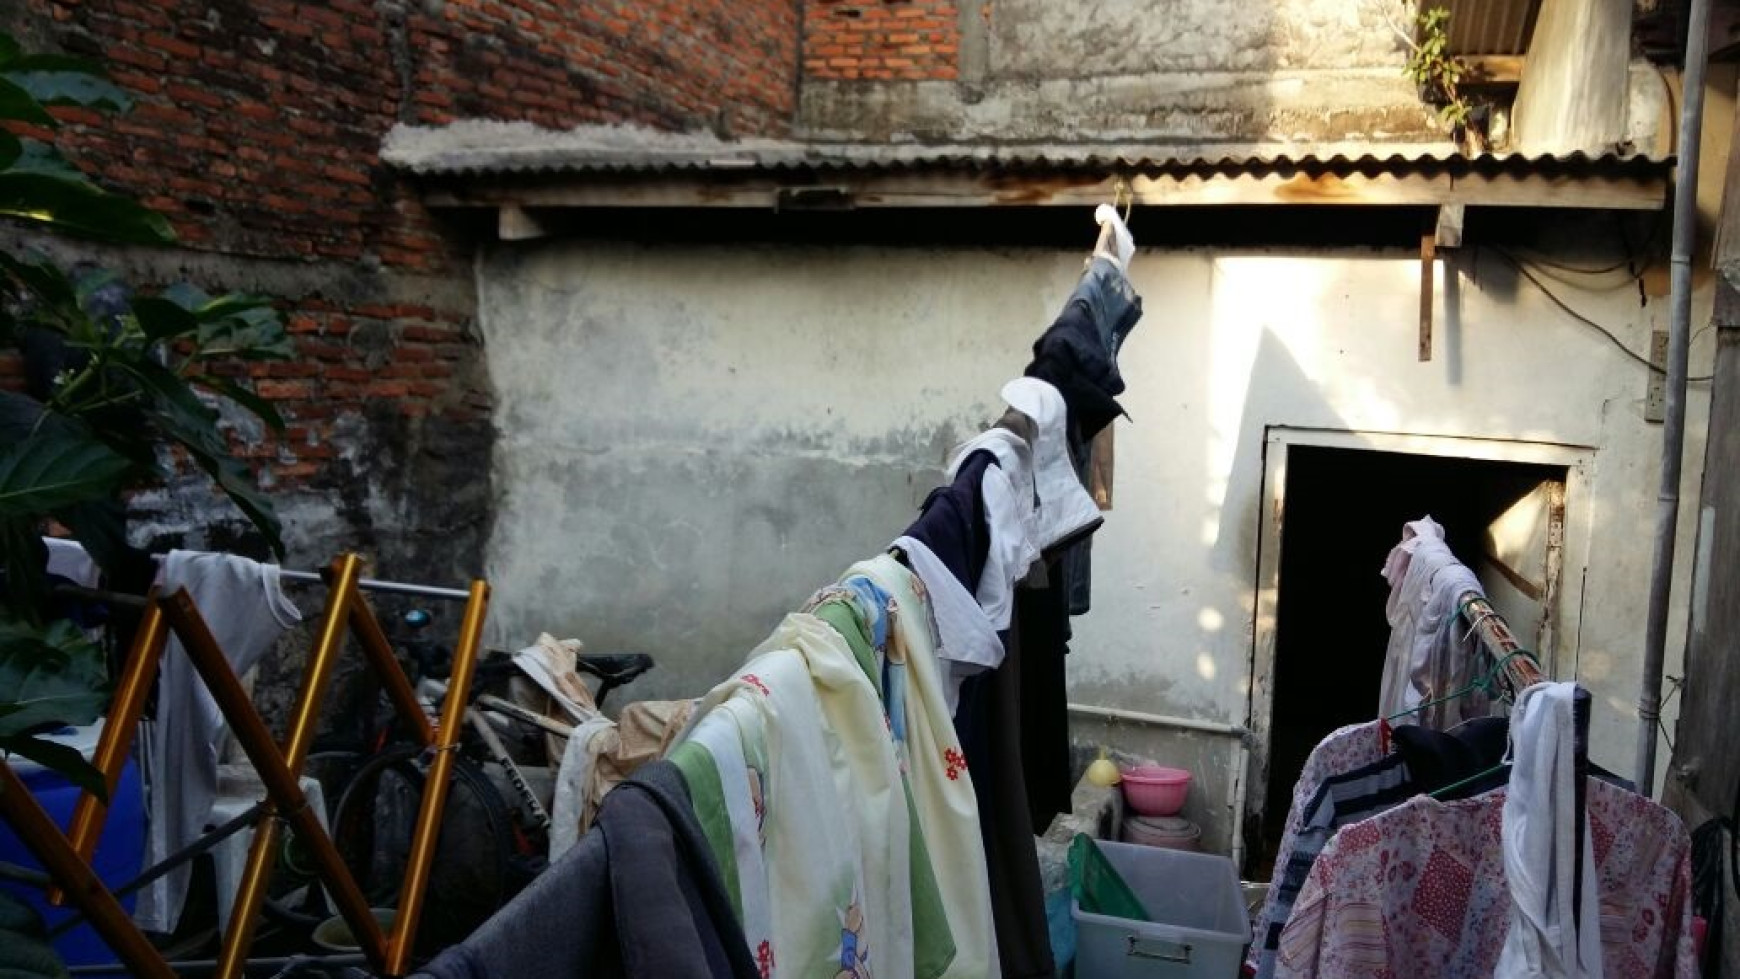 Rumah Nyaman dan Siap huni di Kawasan Komplek Pertamina, Jakarta Utara